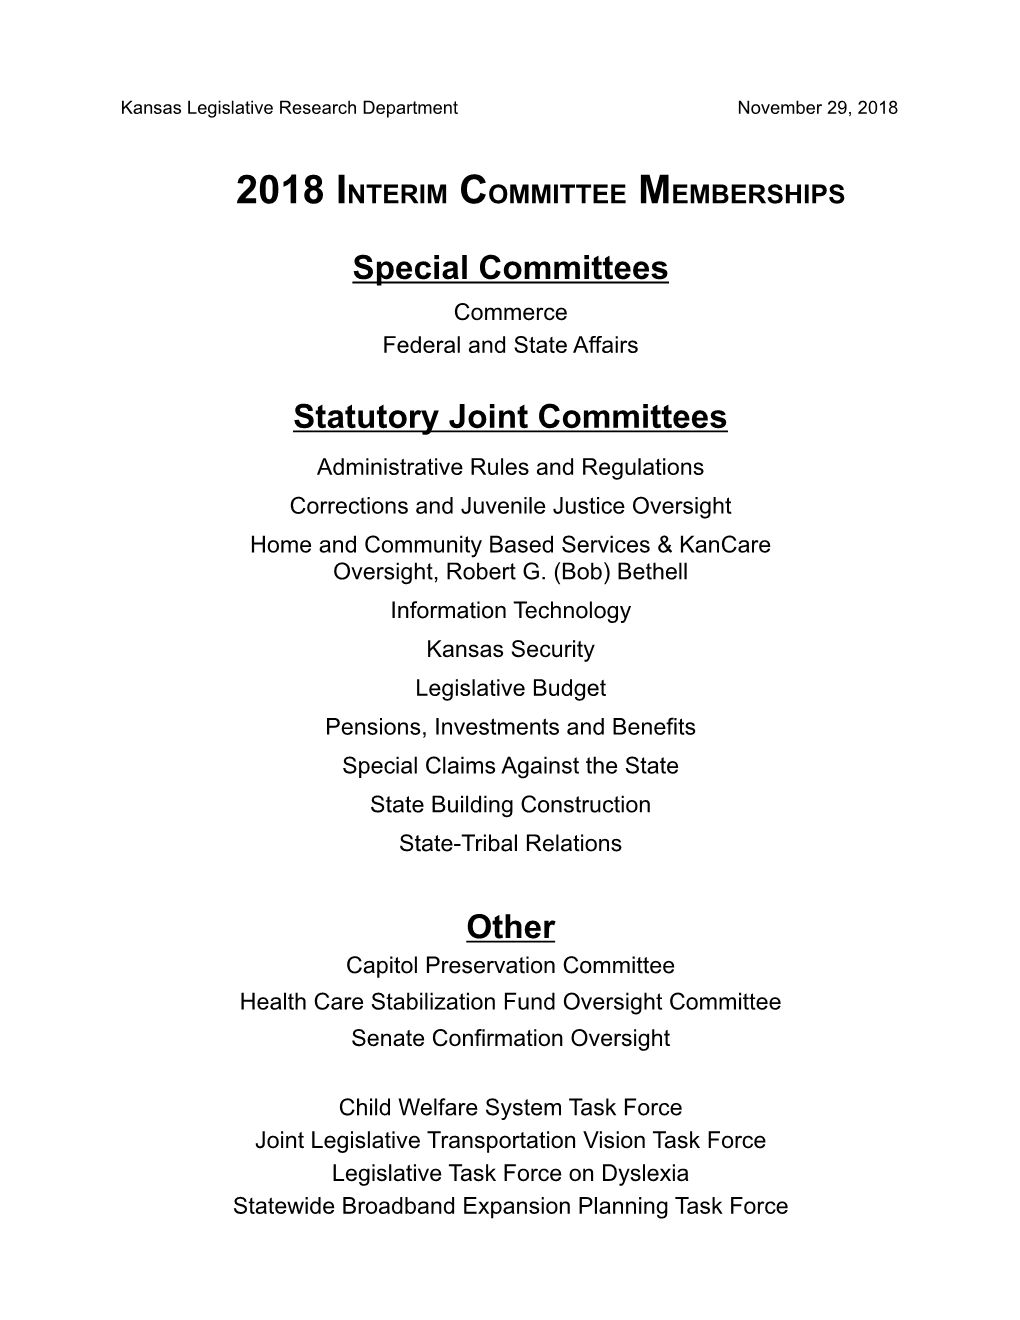 Interim Committee Memberships